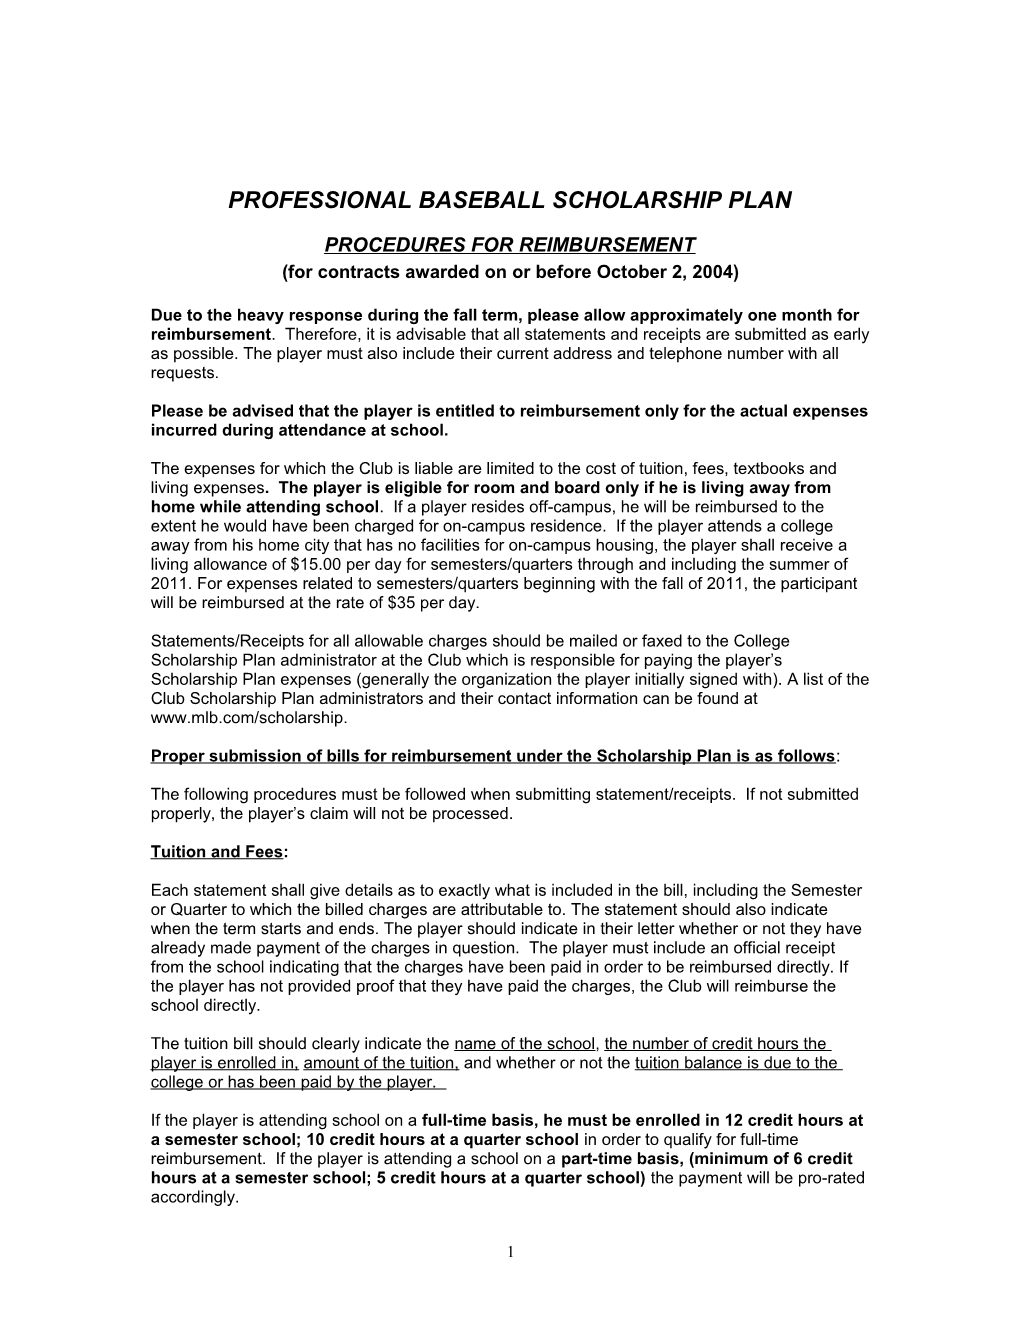 Professional Baseball Scholarship Plan